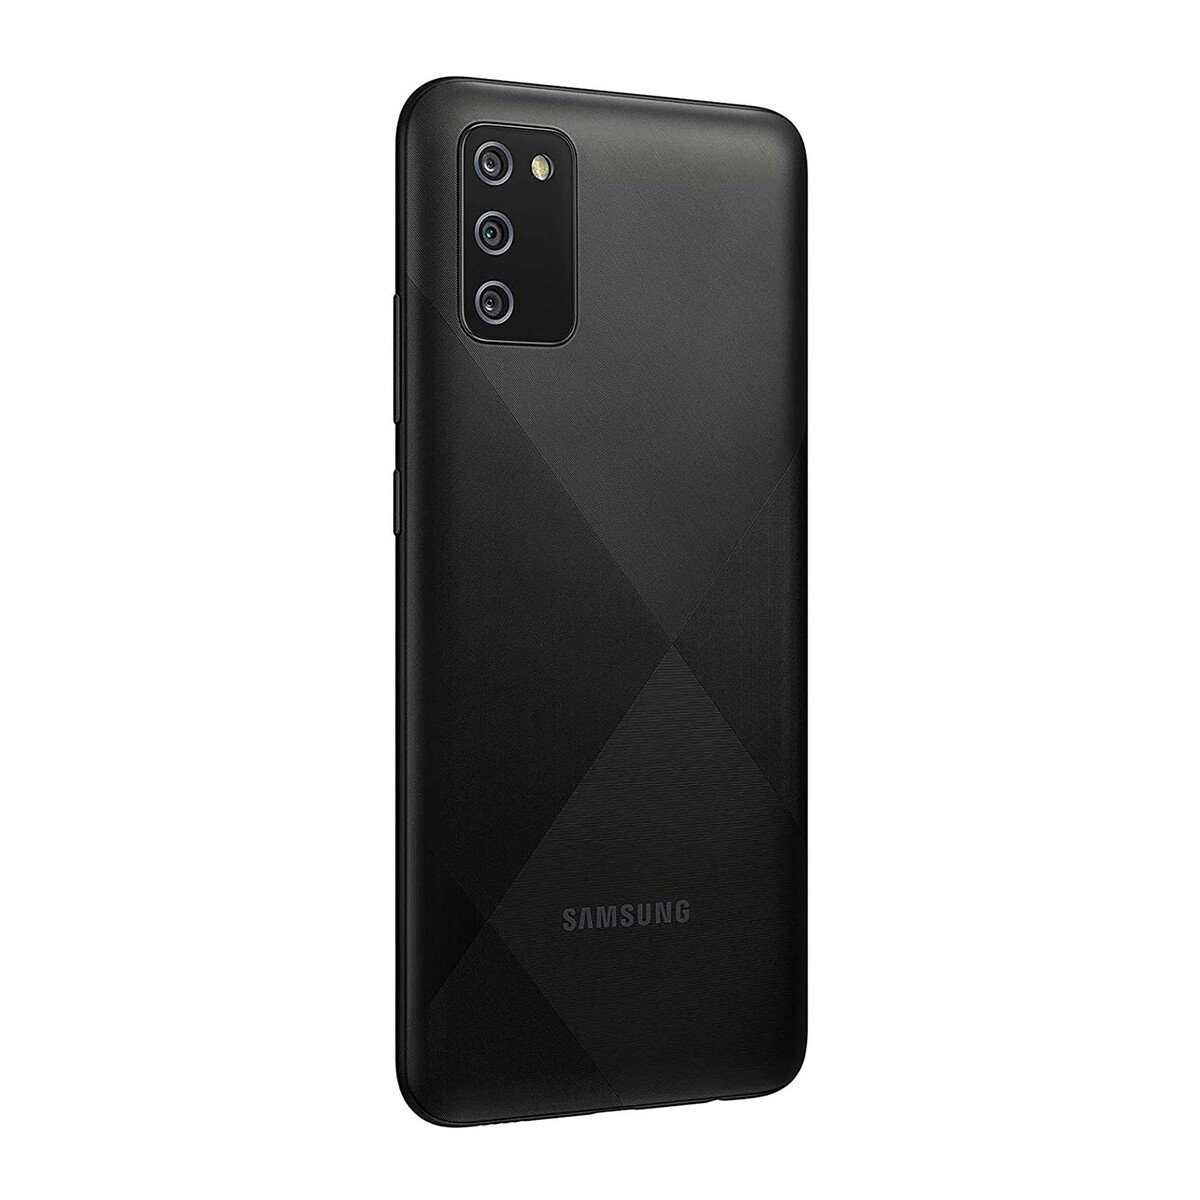 Samsung Galaxy A02s-SMA025FZ 32GB Black